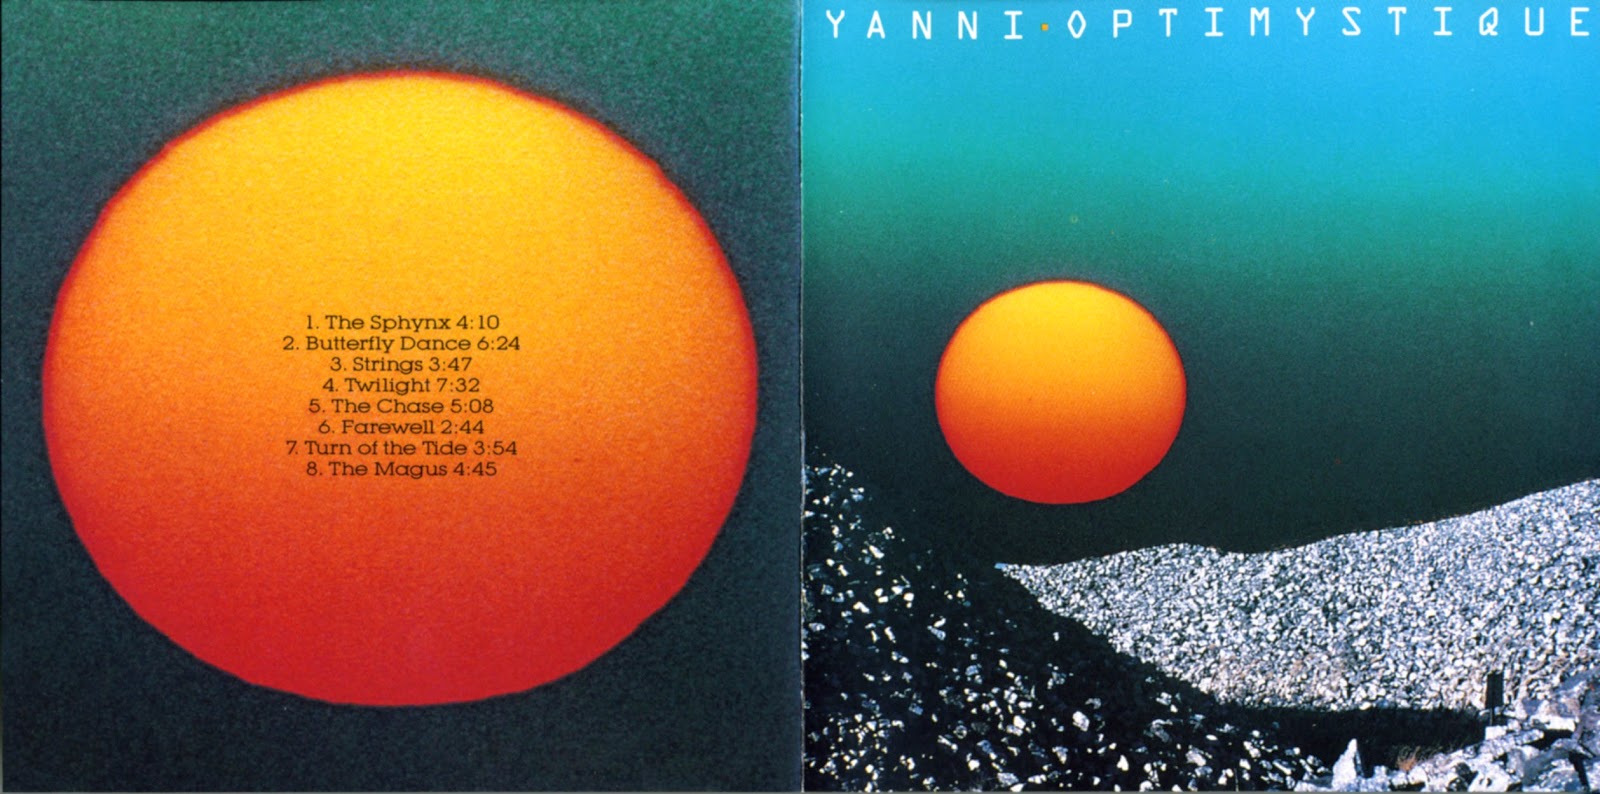 Music Life 2013: Yanni - Optimystique [FLAC] (1989)